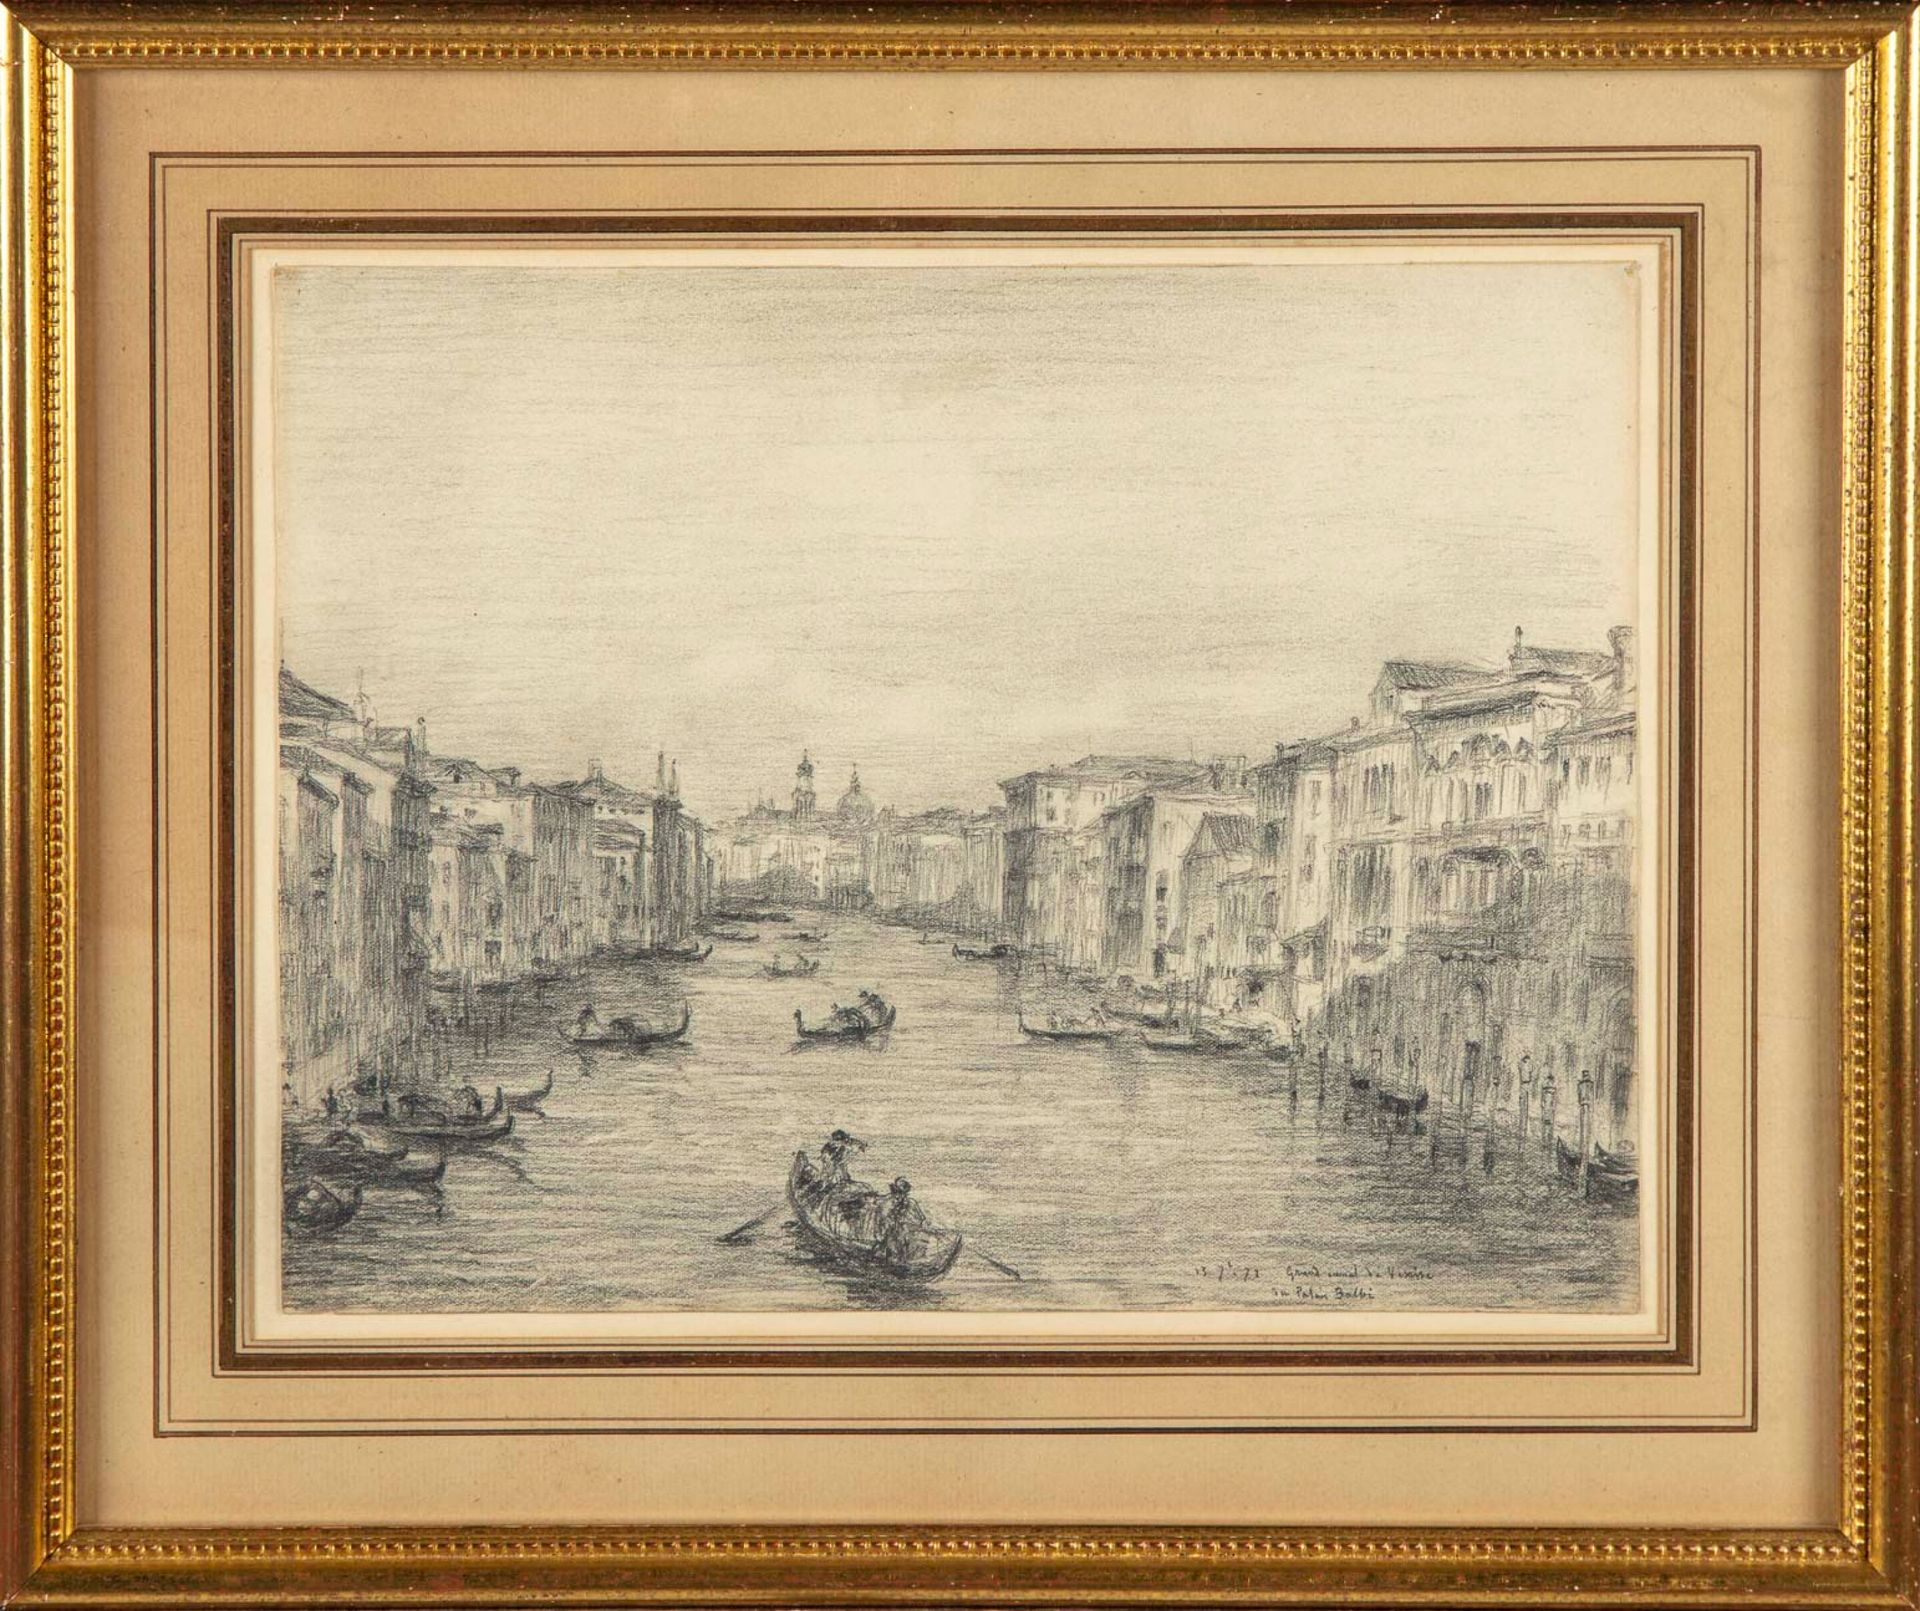 ECOLE FRANCAISE - CICERI 19世纪中叶归属于CICERI的法国学校

威尼斯大运河或巴尔比宫

铅笔画，位置和日期为13.7bre.72&hellip;